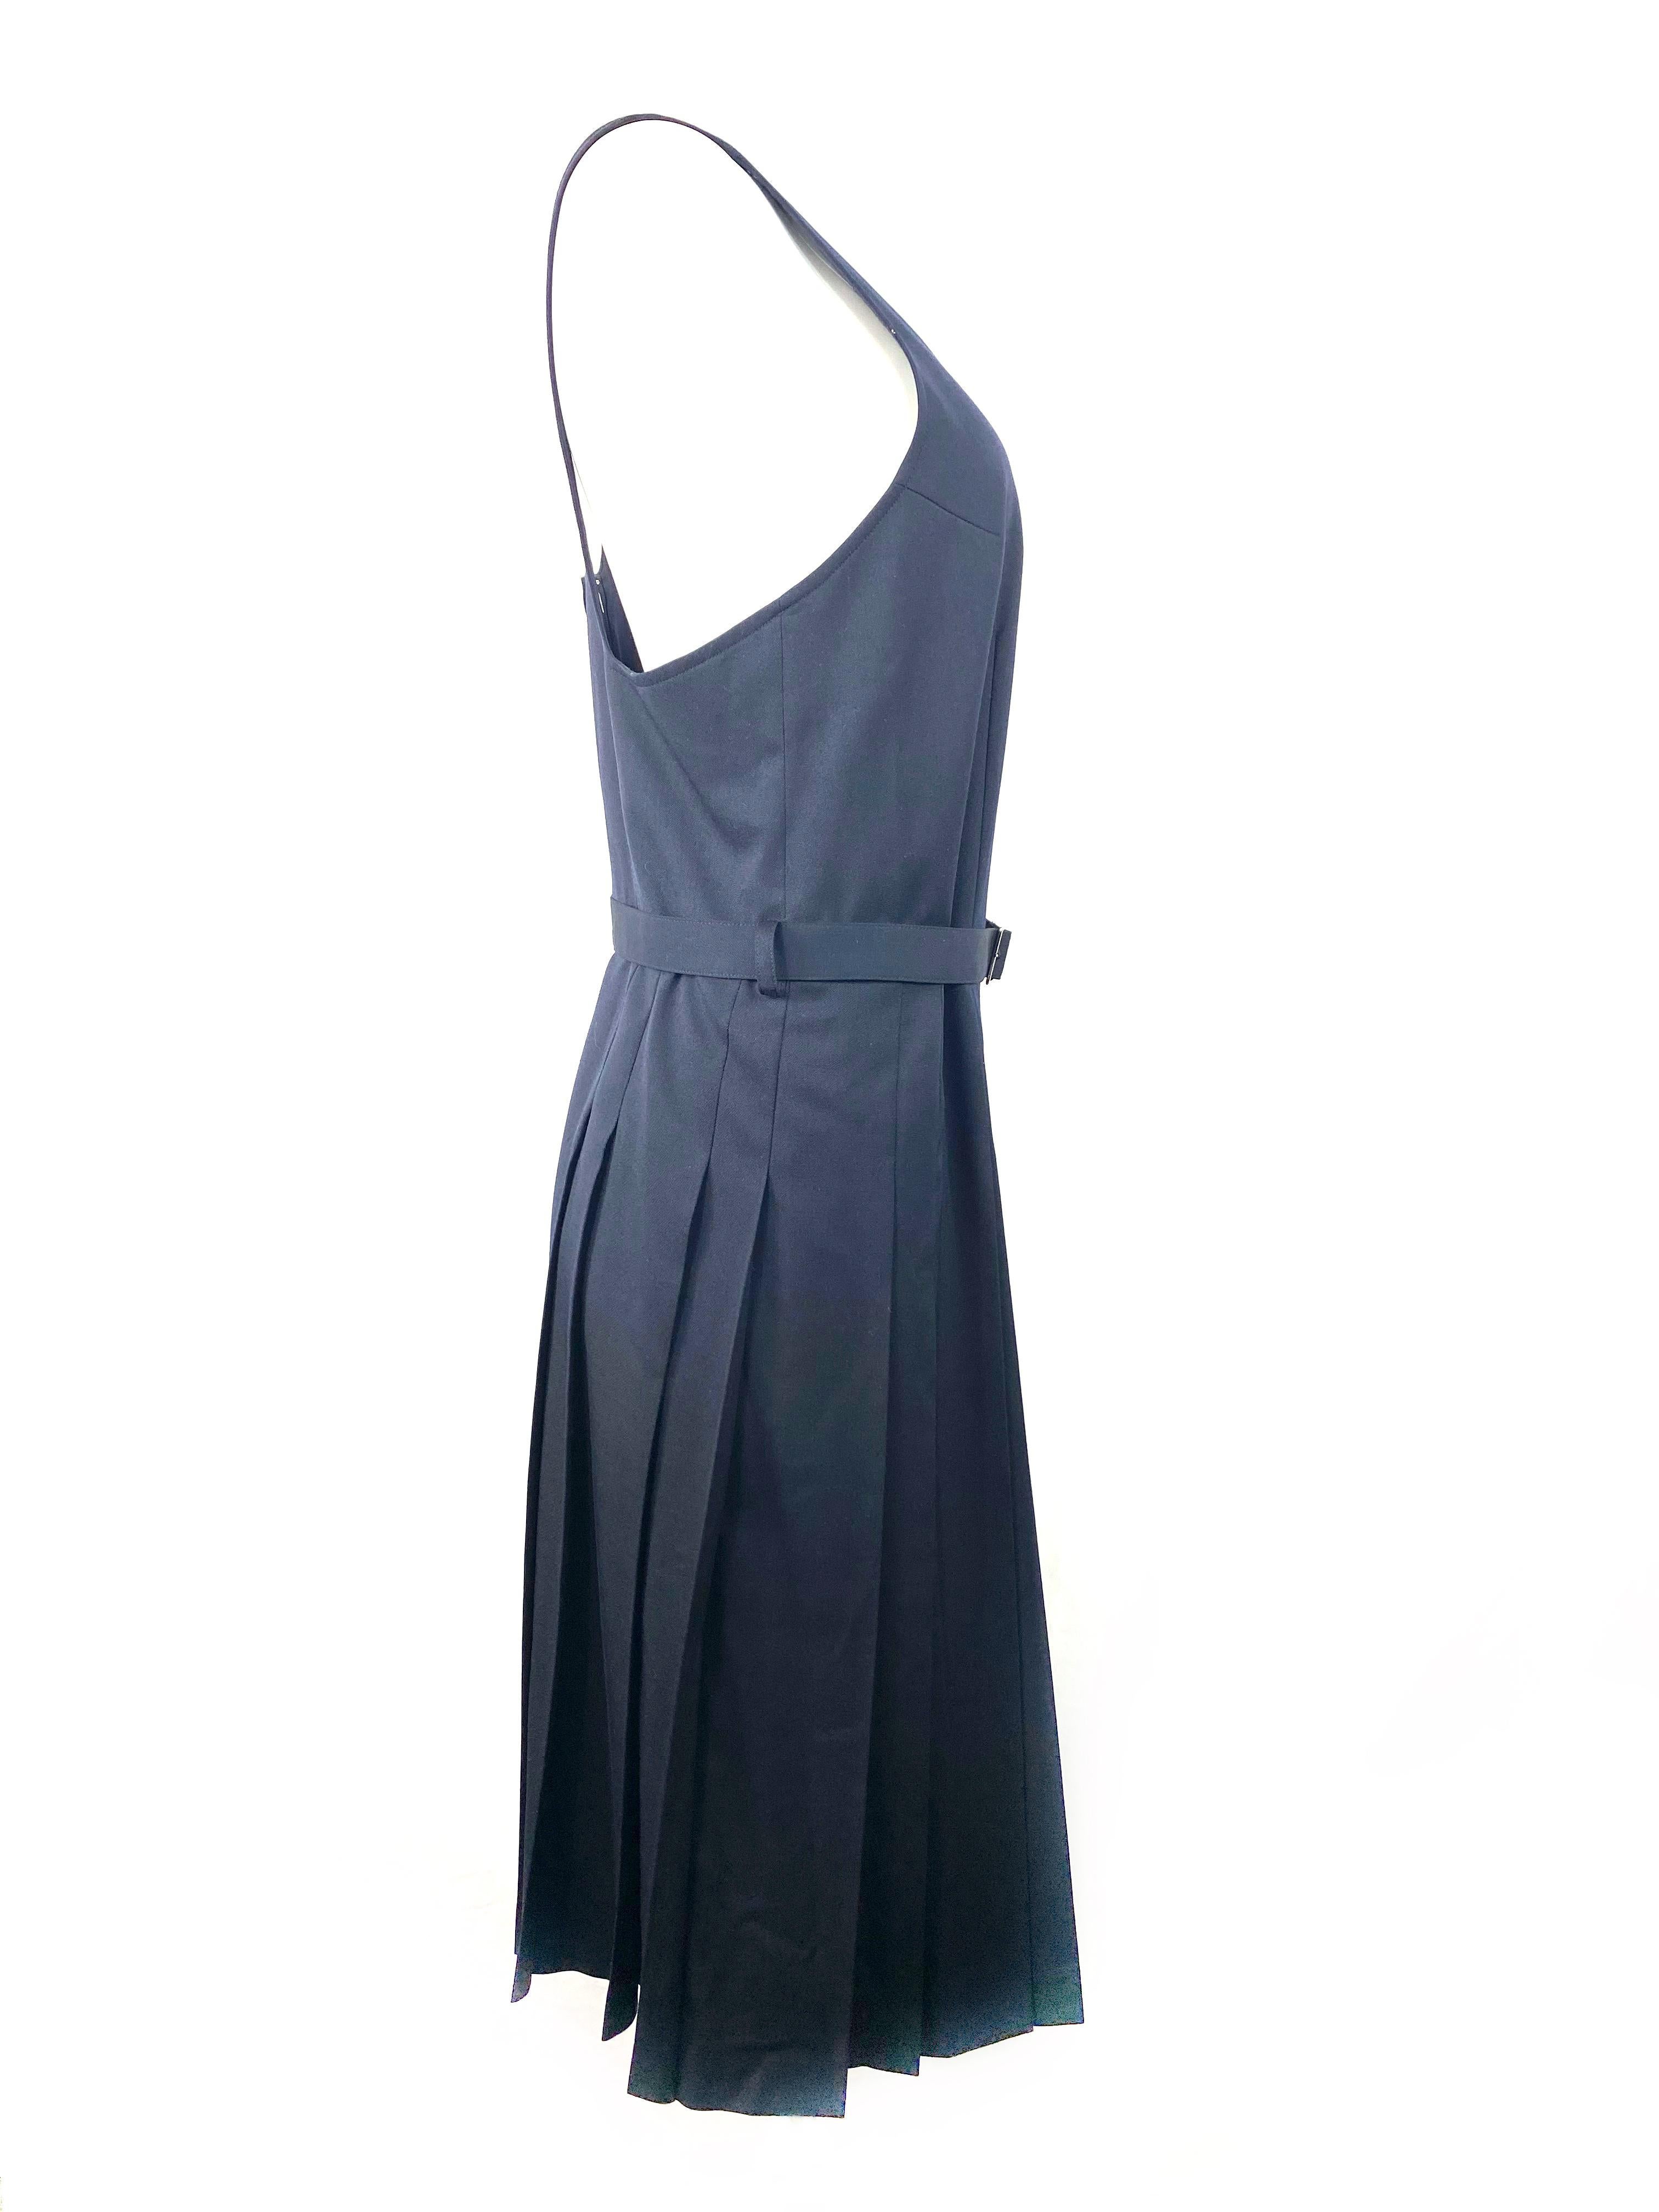 Black Comme des Garcons Navy Wool Sleeveless Dress w/ Belt Size S